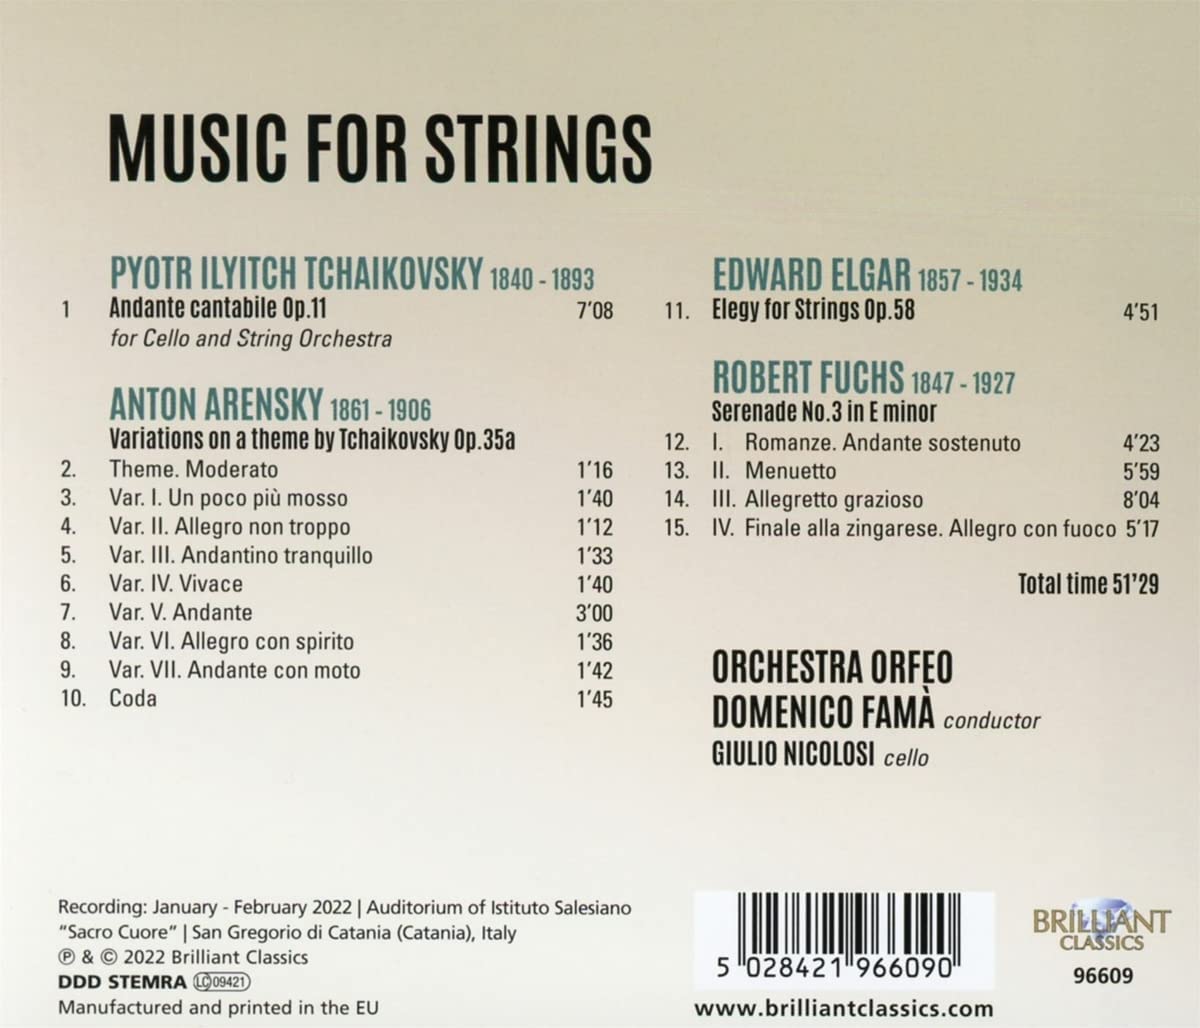 Domenico Fama 현을 위한 음악 - 차이콥스키 / 아렌스키 / 엘가 / 푹스 작품 모음집 (Music for Strings by Elgar, Arensky, Tchaikovsky, Fuchs)